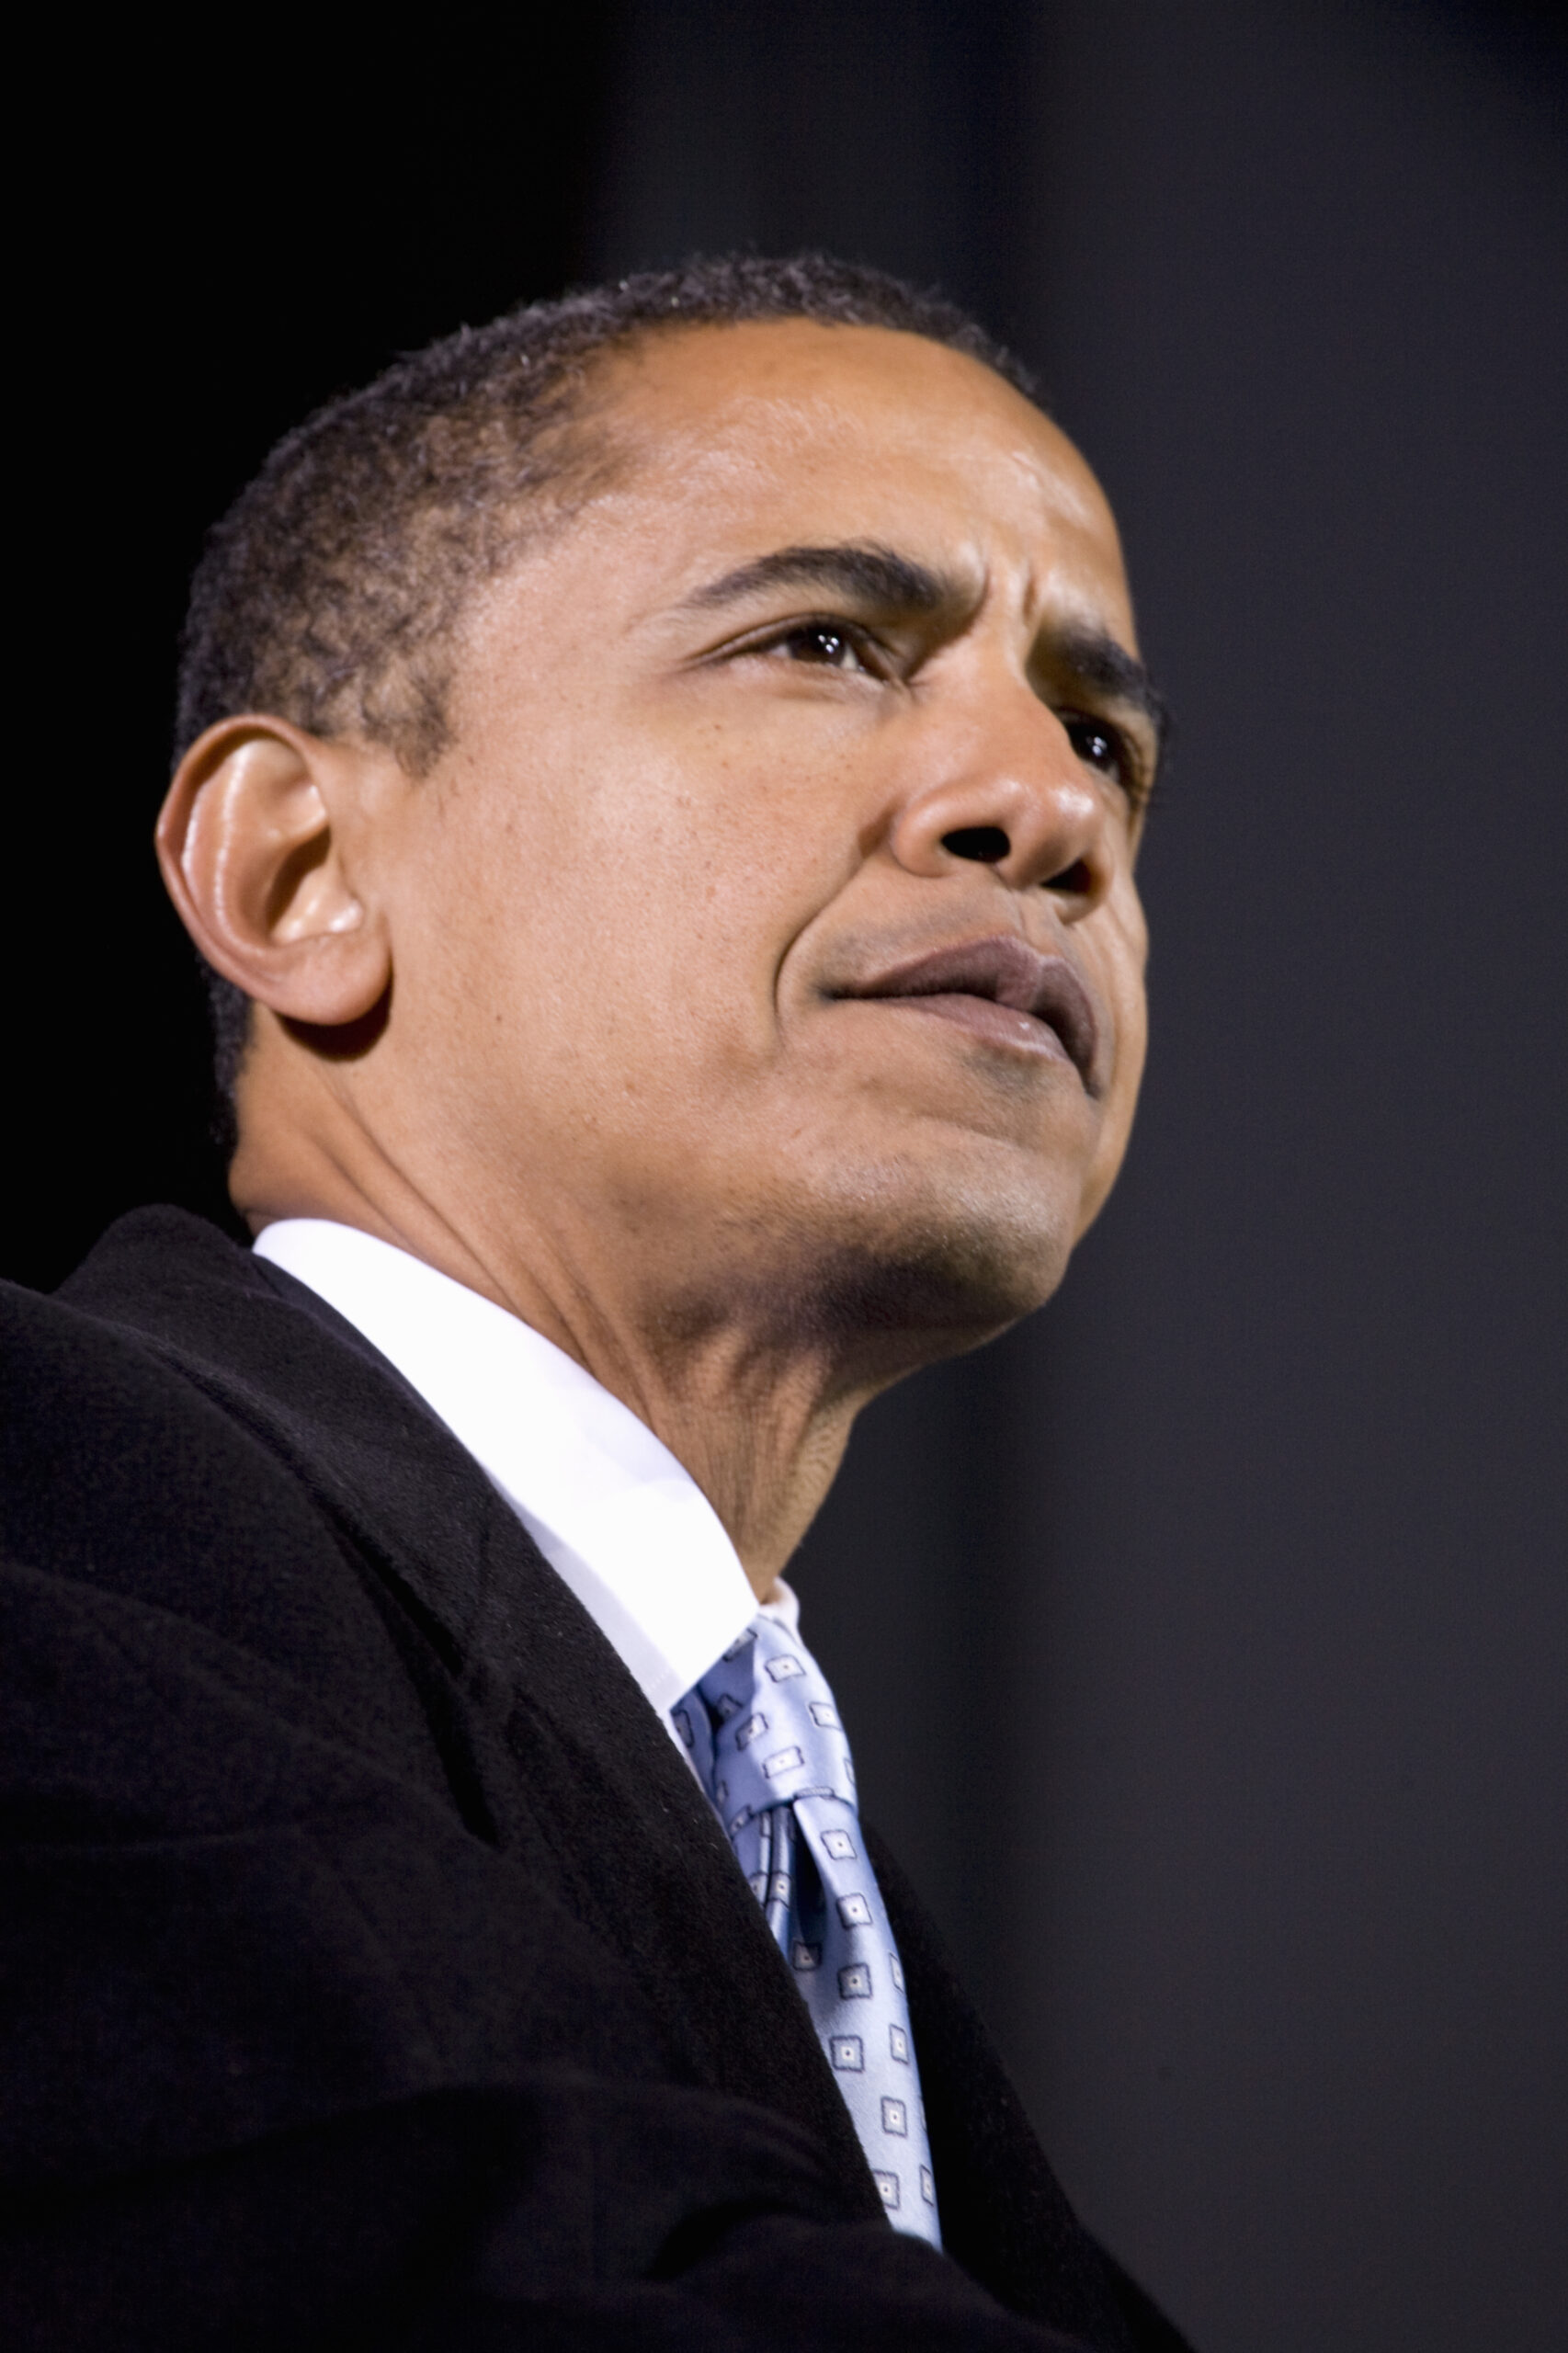 Obama Presidential Campaign 2008